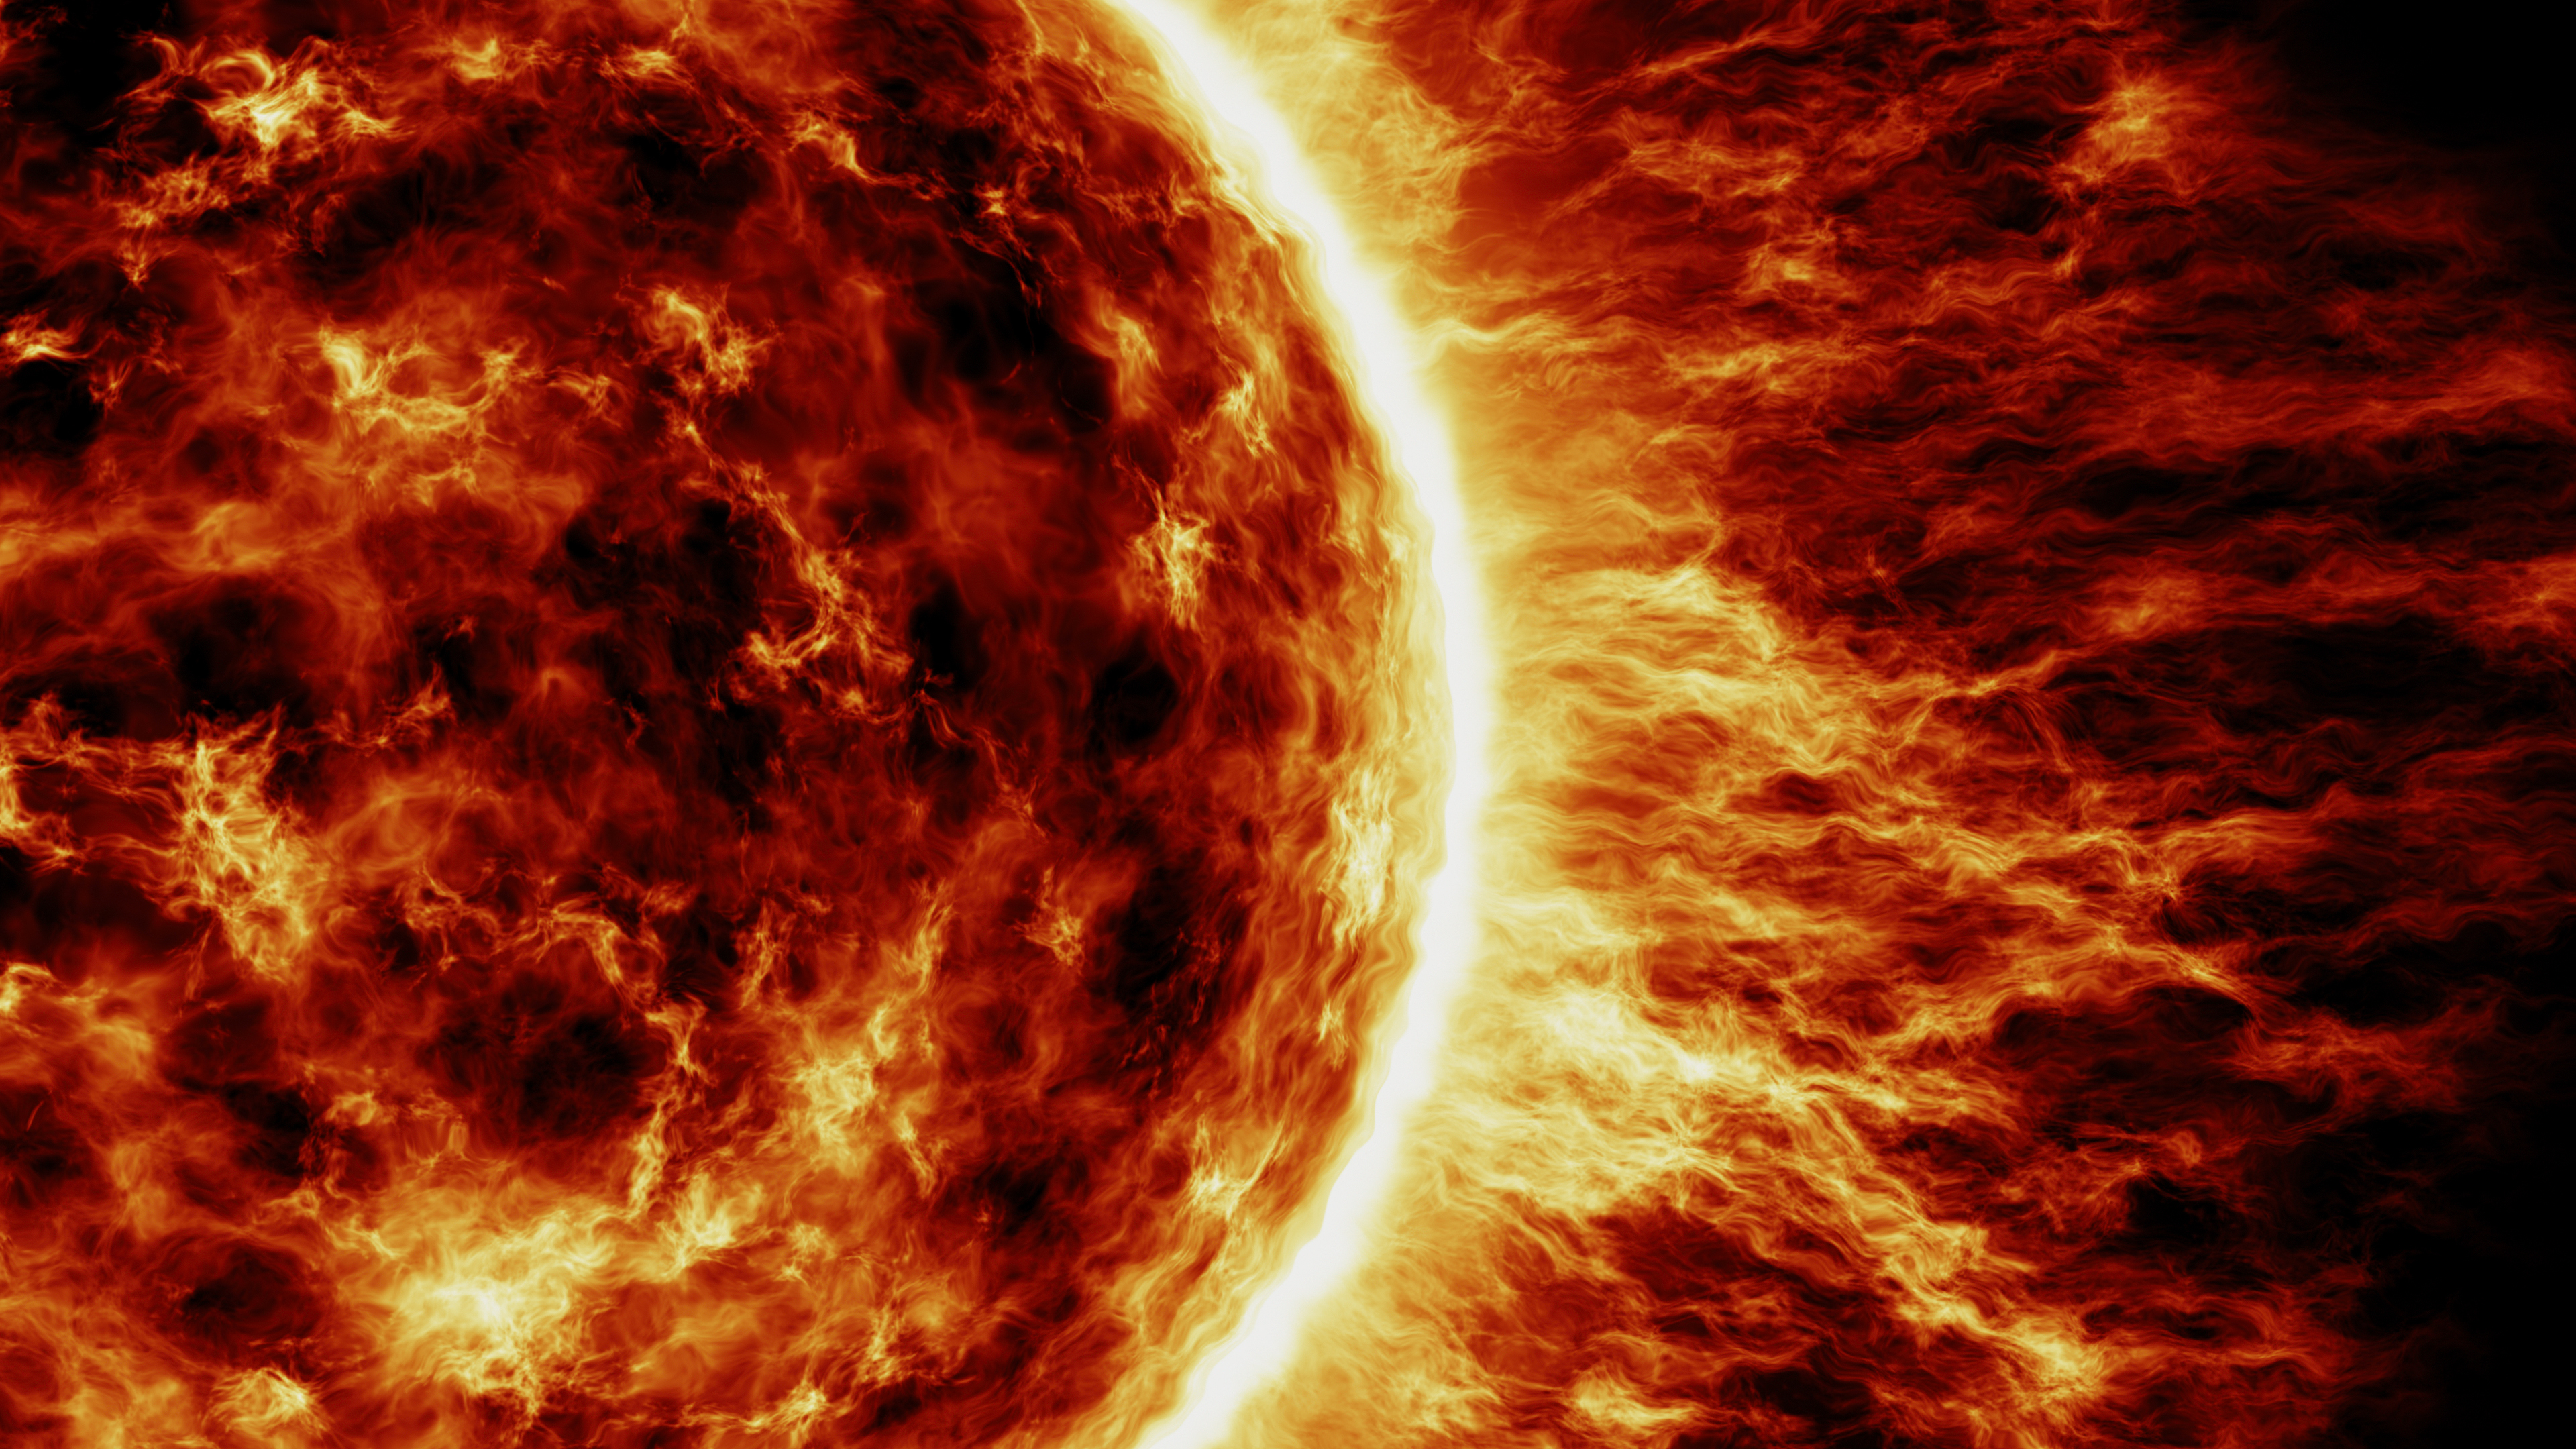 Artist's illustration of the sun. Orange fireball firing off large solar flares.